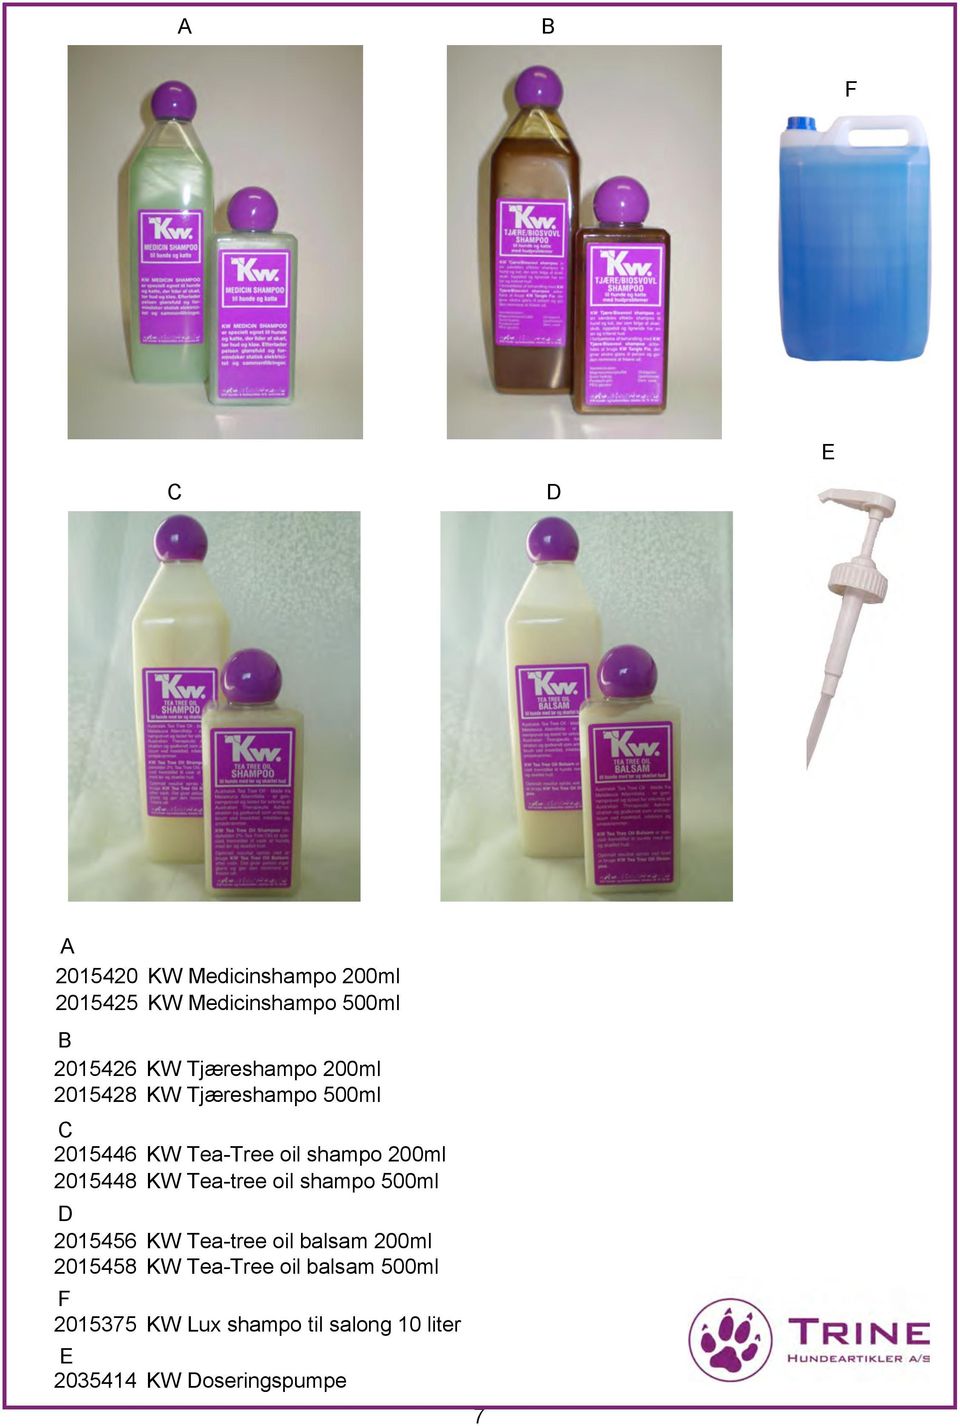 2015448 KW Tea-tree oil shampo 500ml D 2015456 KW Tea-tree oil balsam 200ml 2015458 KW